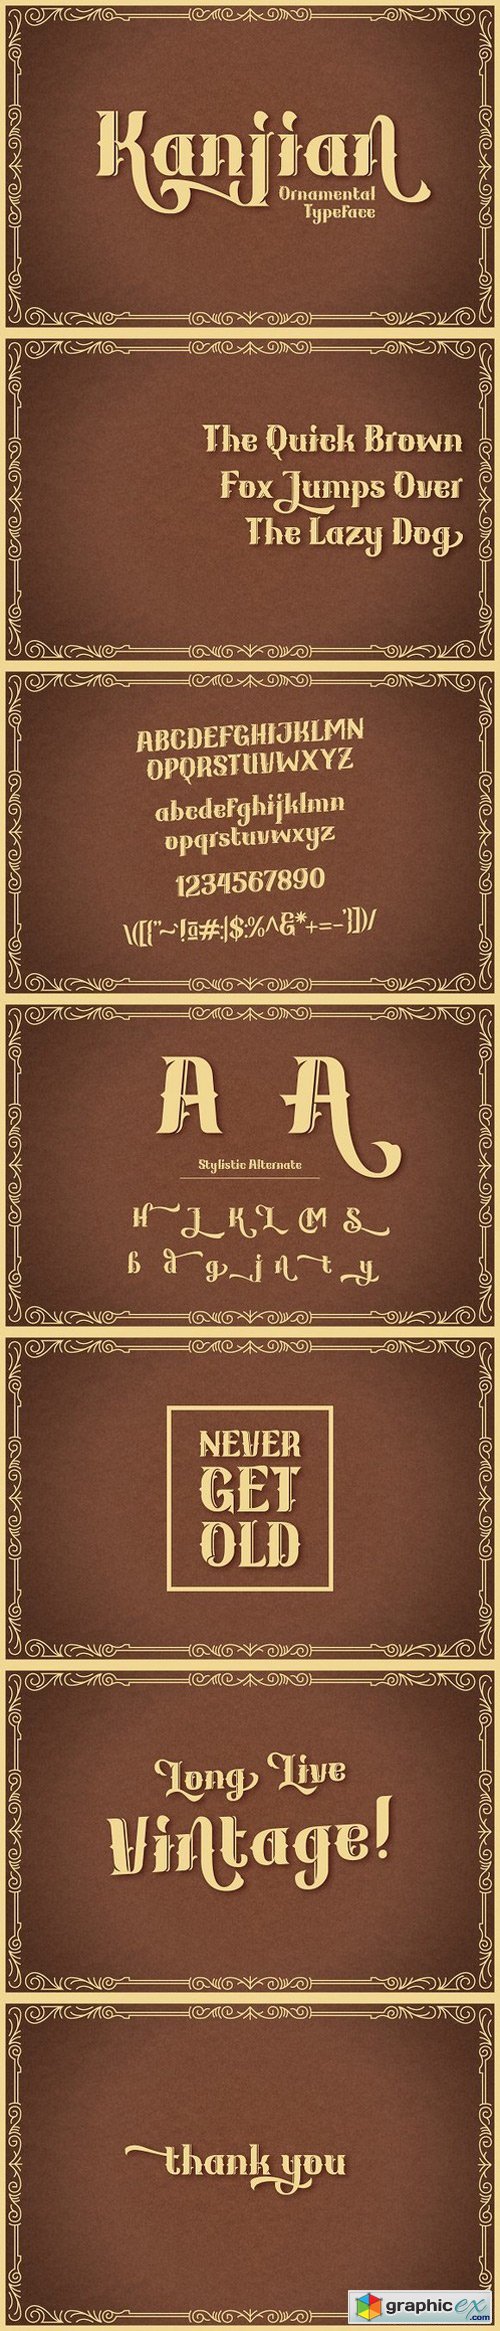 Kanjian Typeface